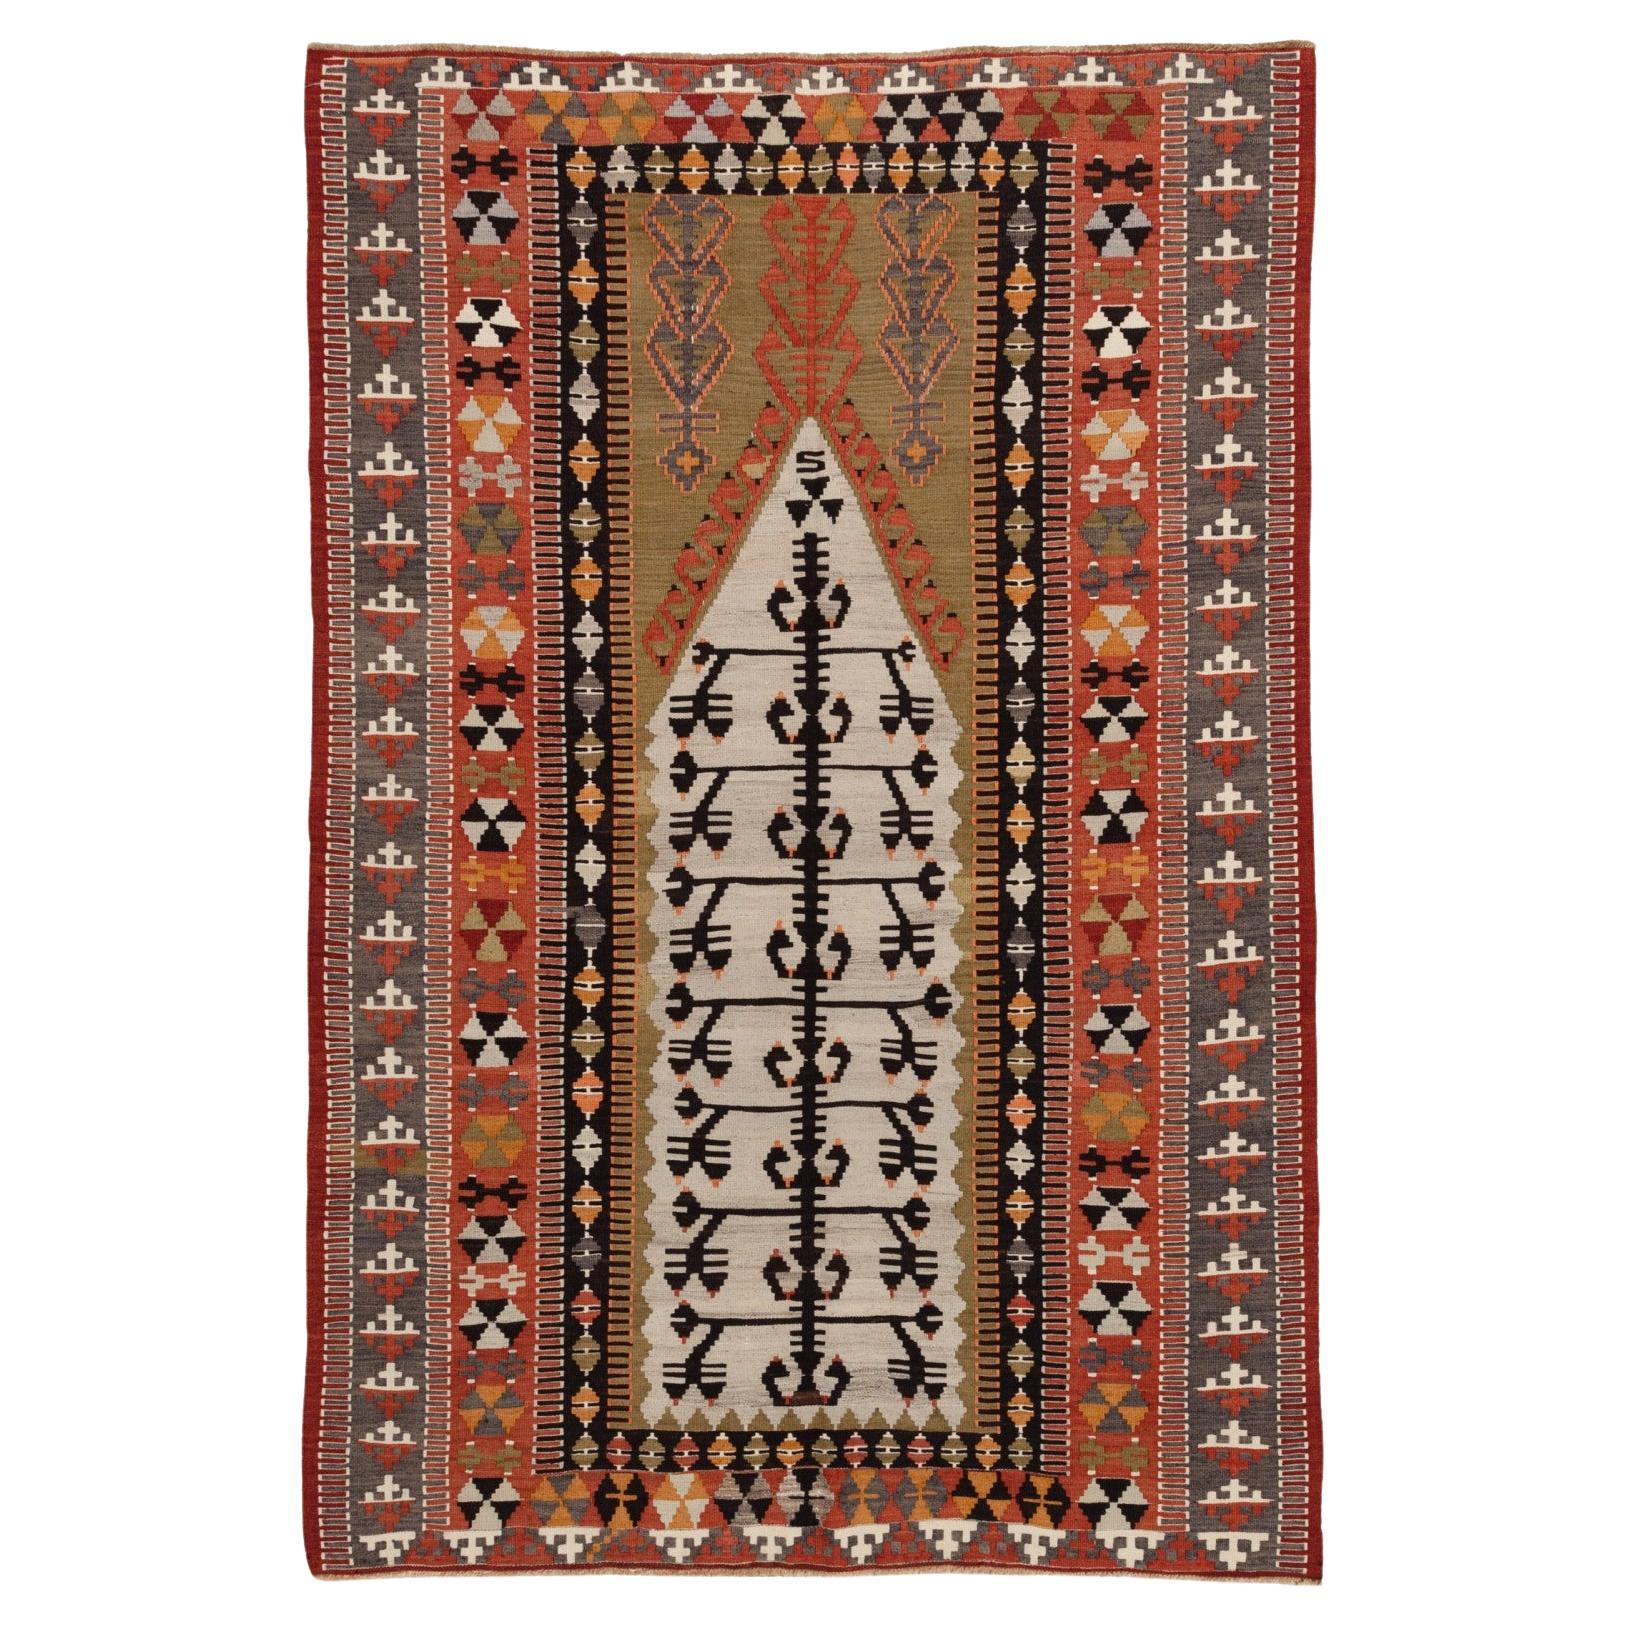 Vintage Konya Obruk Kilim Old Central Anatolian Rug Turkish Carpet